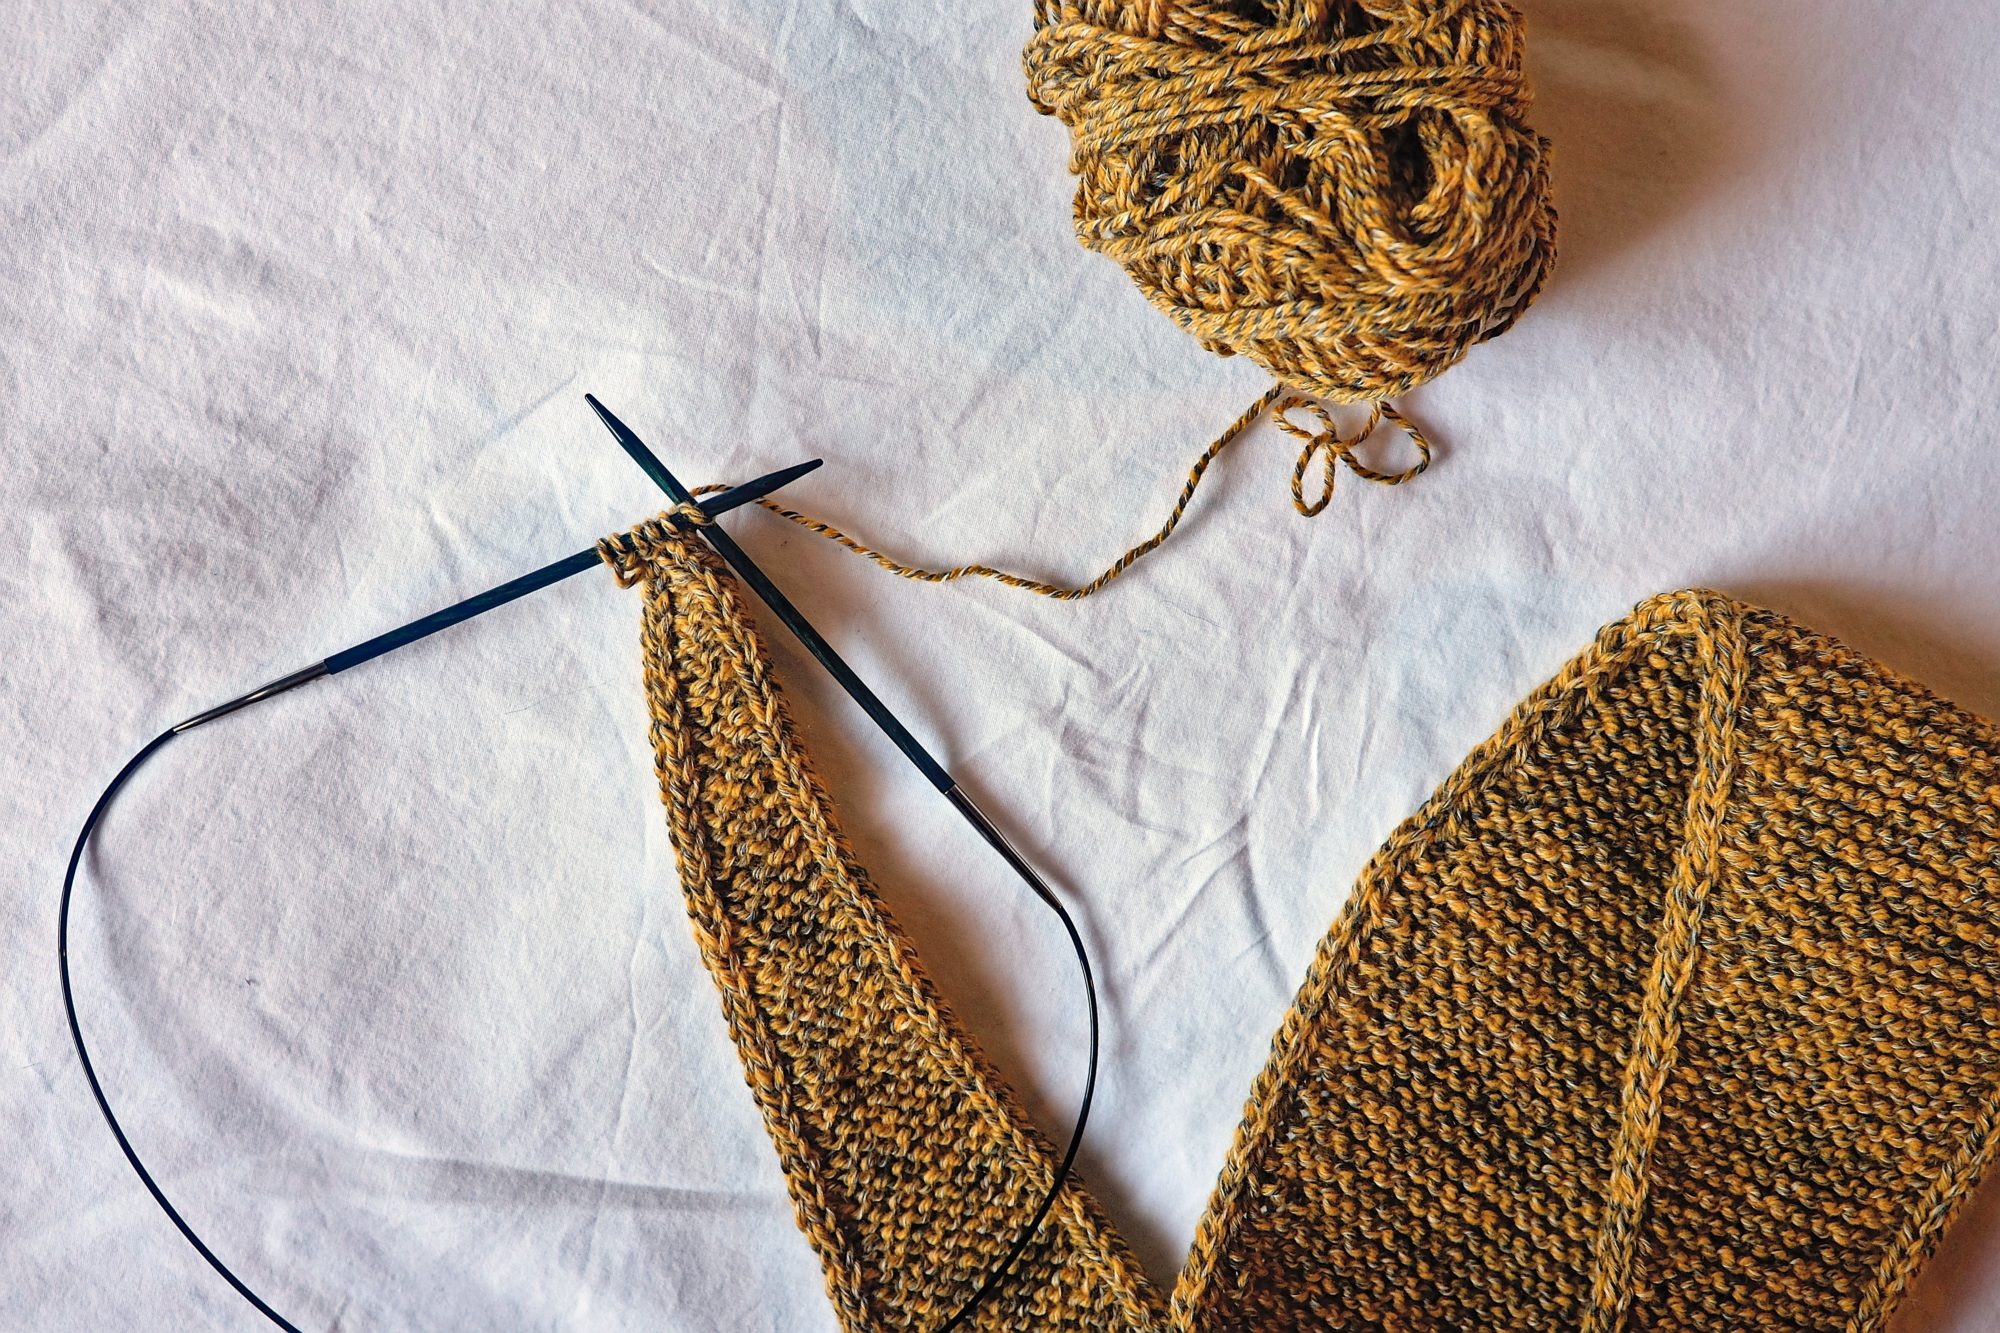 Knitting a Sophie Scarf with Truva yarn